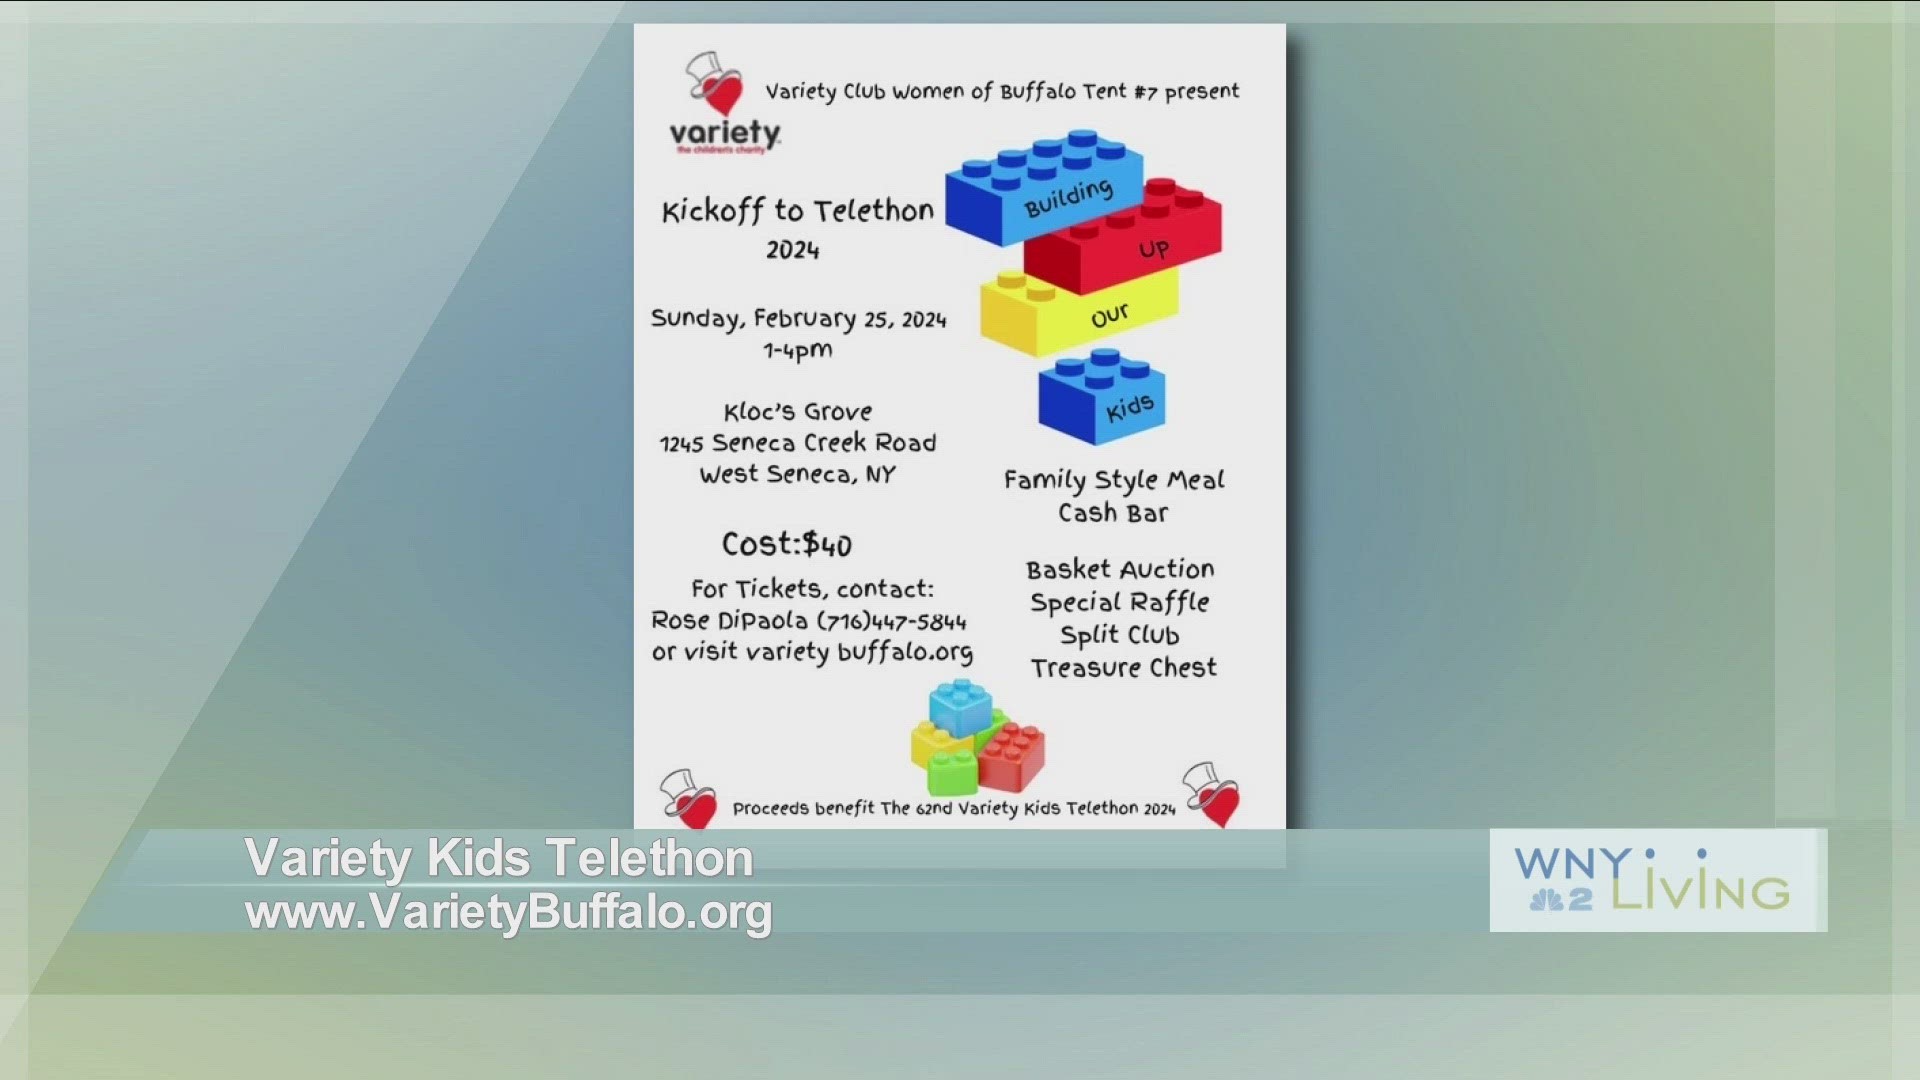 WNY Living - February 17 - Variety Kids Telethon (THIS VIDEO IS SPONSORED BY VARIETY KIDS TELETHON)